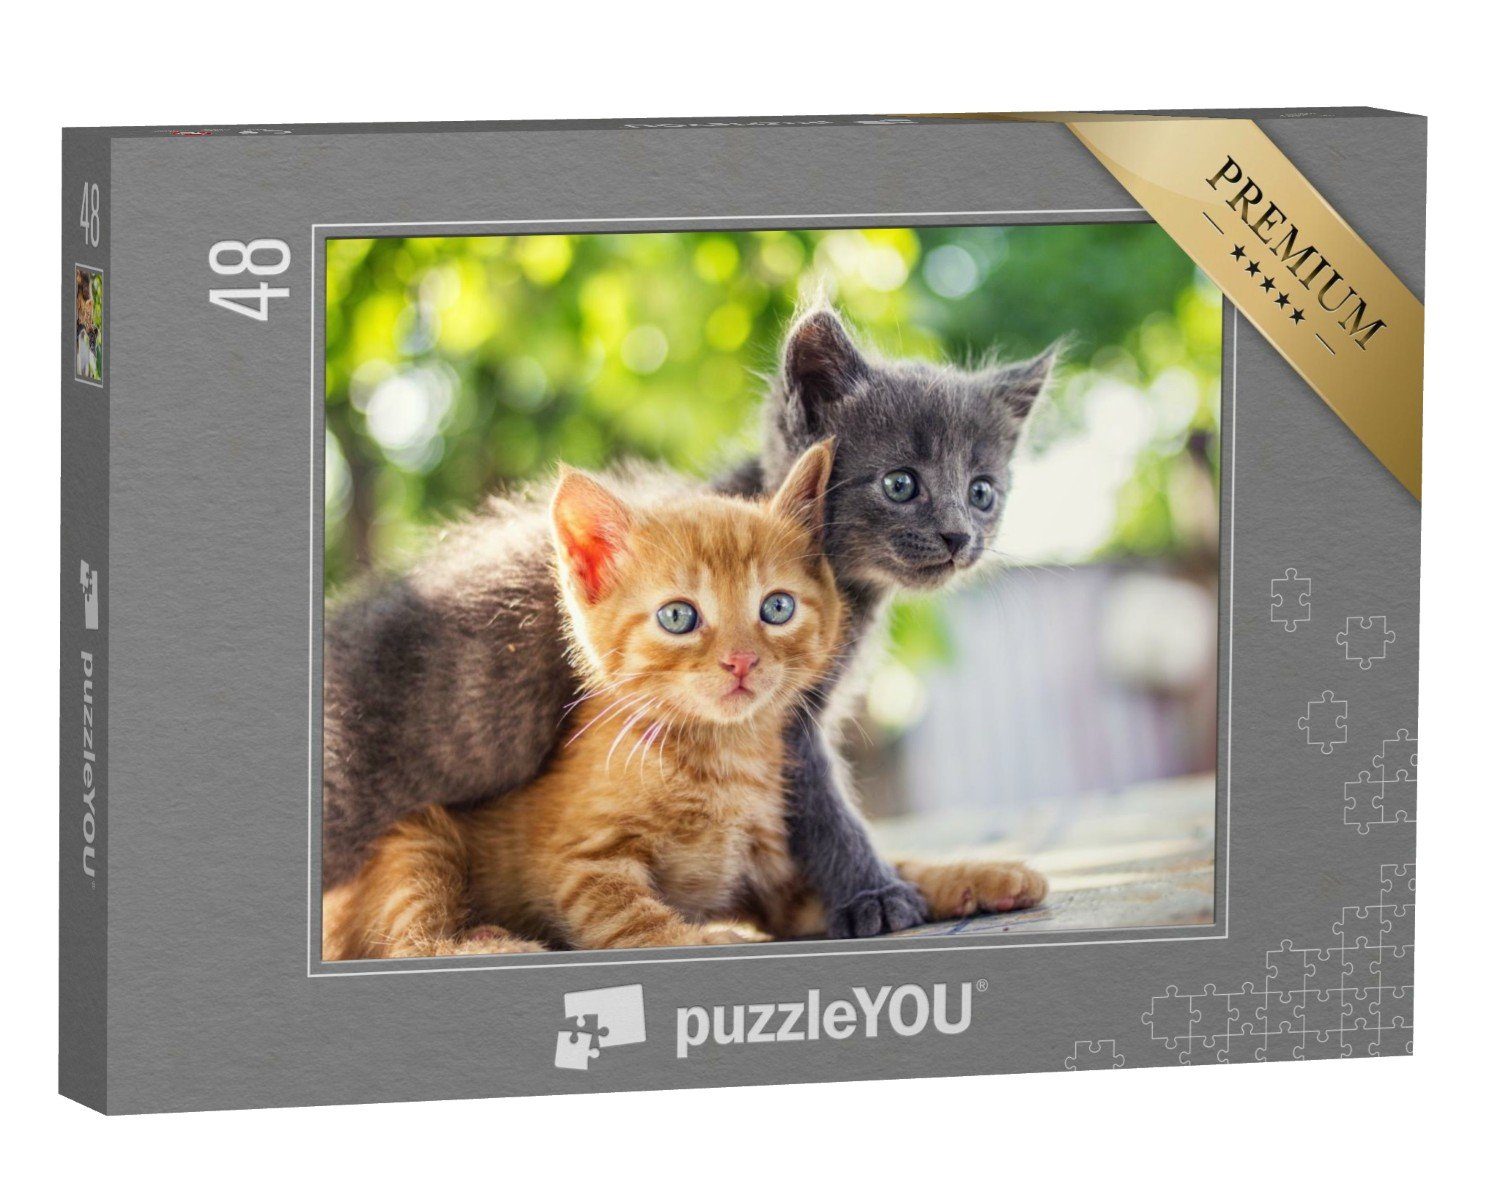 Katzen-Puzzles Puzzleteile, Zwei spielen, Puzzle bezaubernde puzzleYOU puzzleYOU-Kollektionen 48 Kätzchen